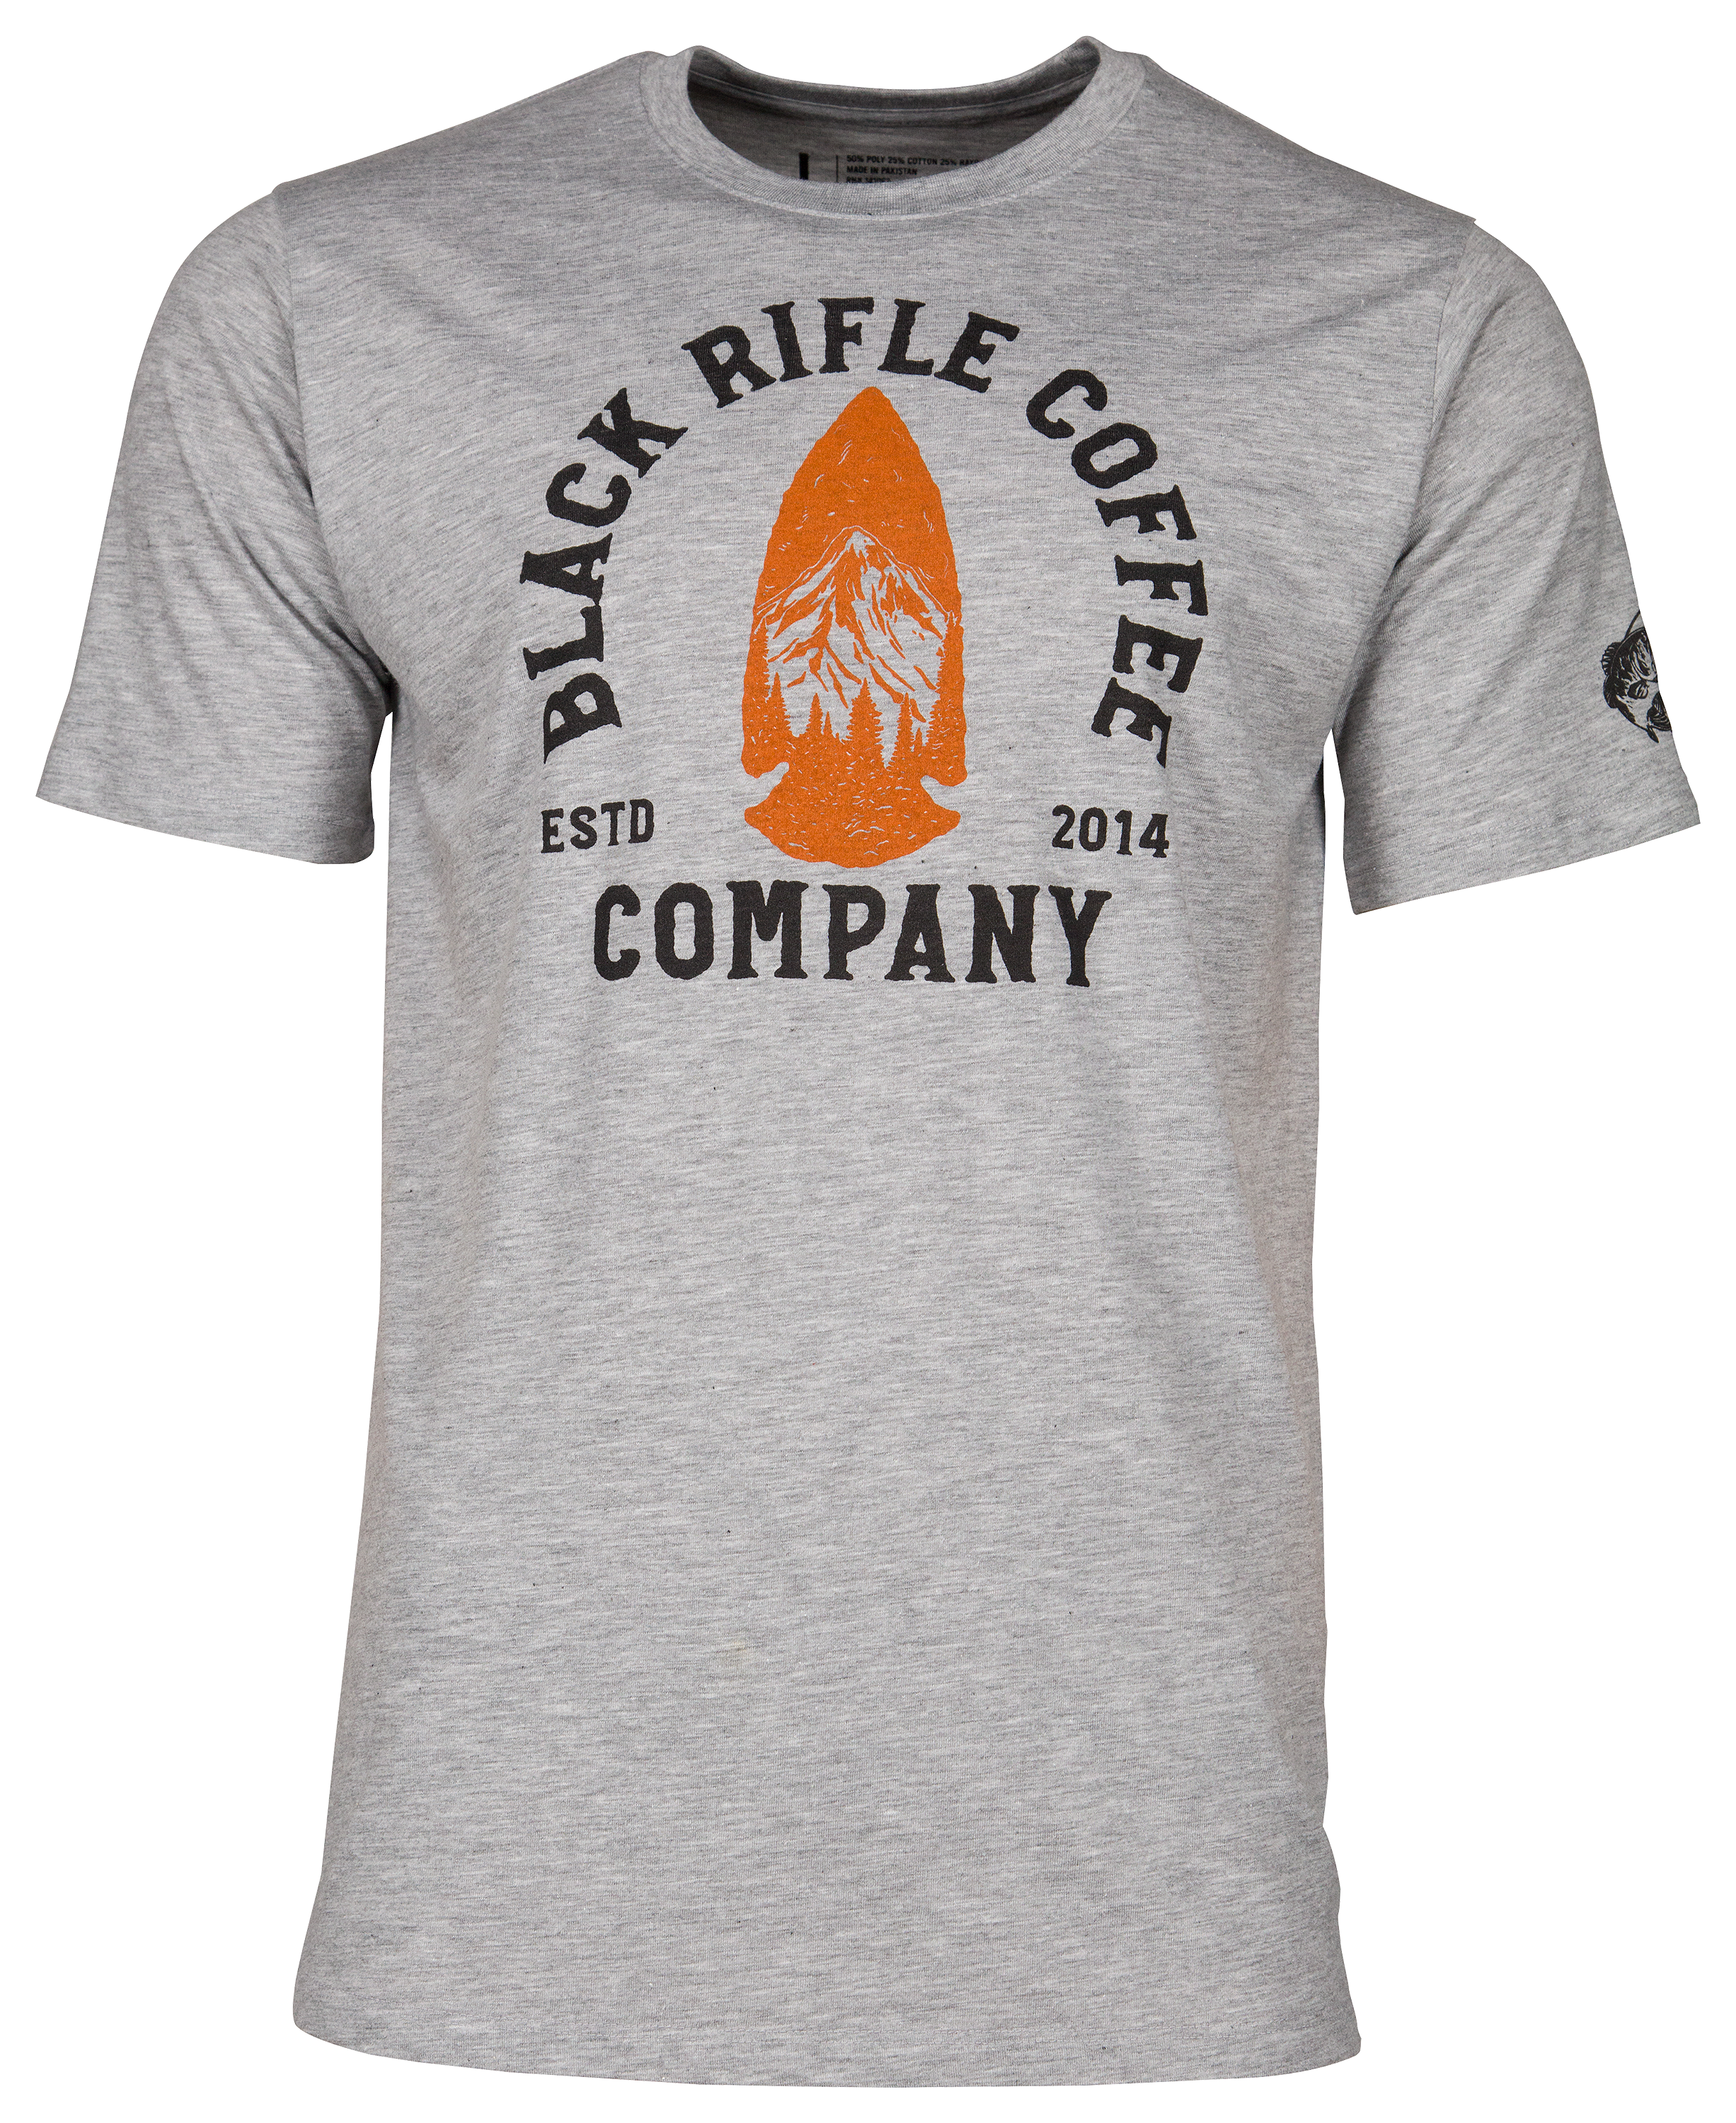 Apparel – Black Rifle Coffee Company